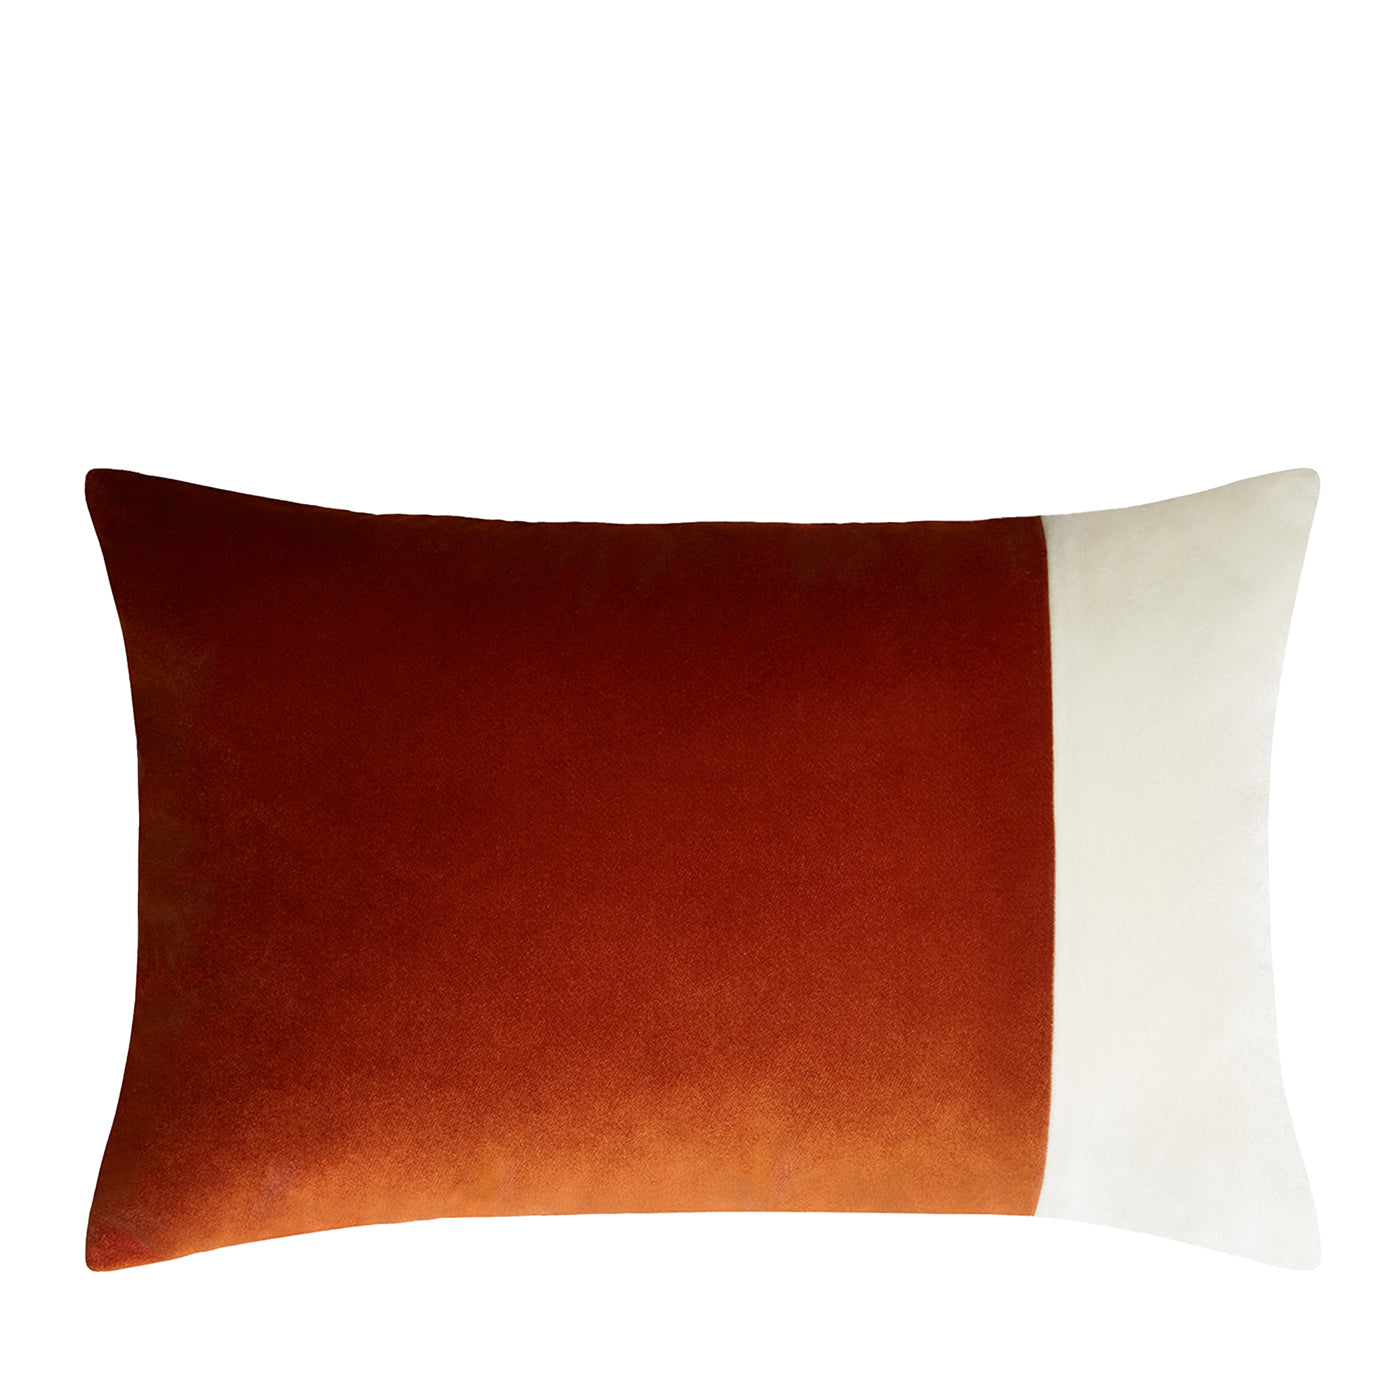 Double Brick Red and White Rectangular Cushion - Main view